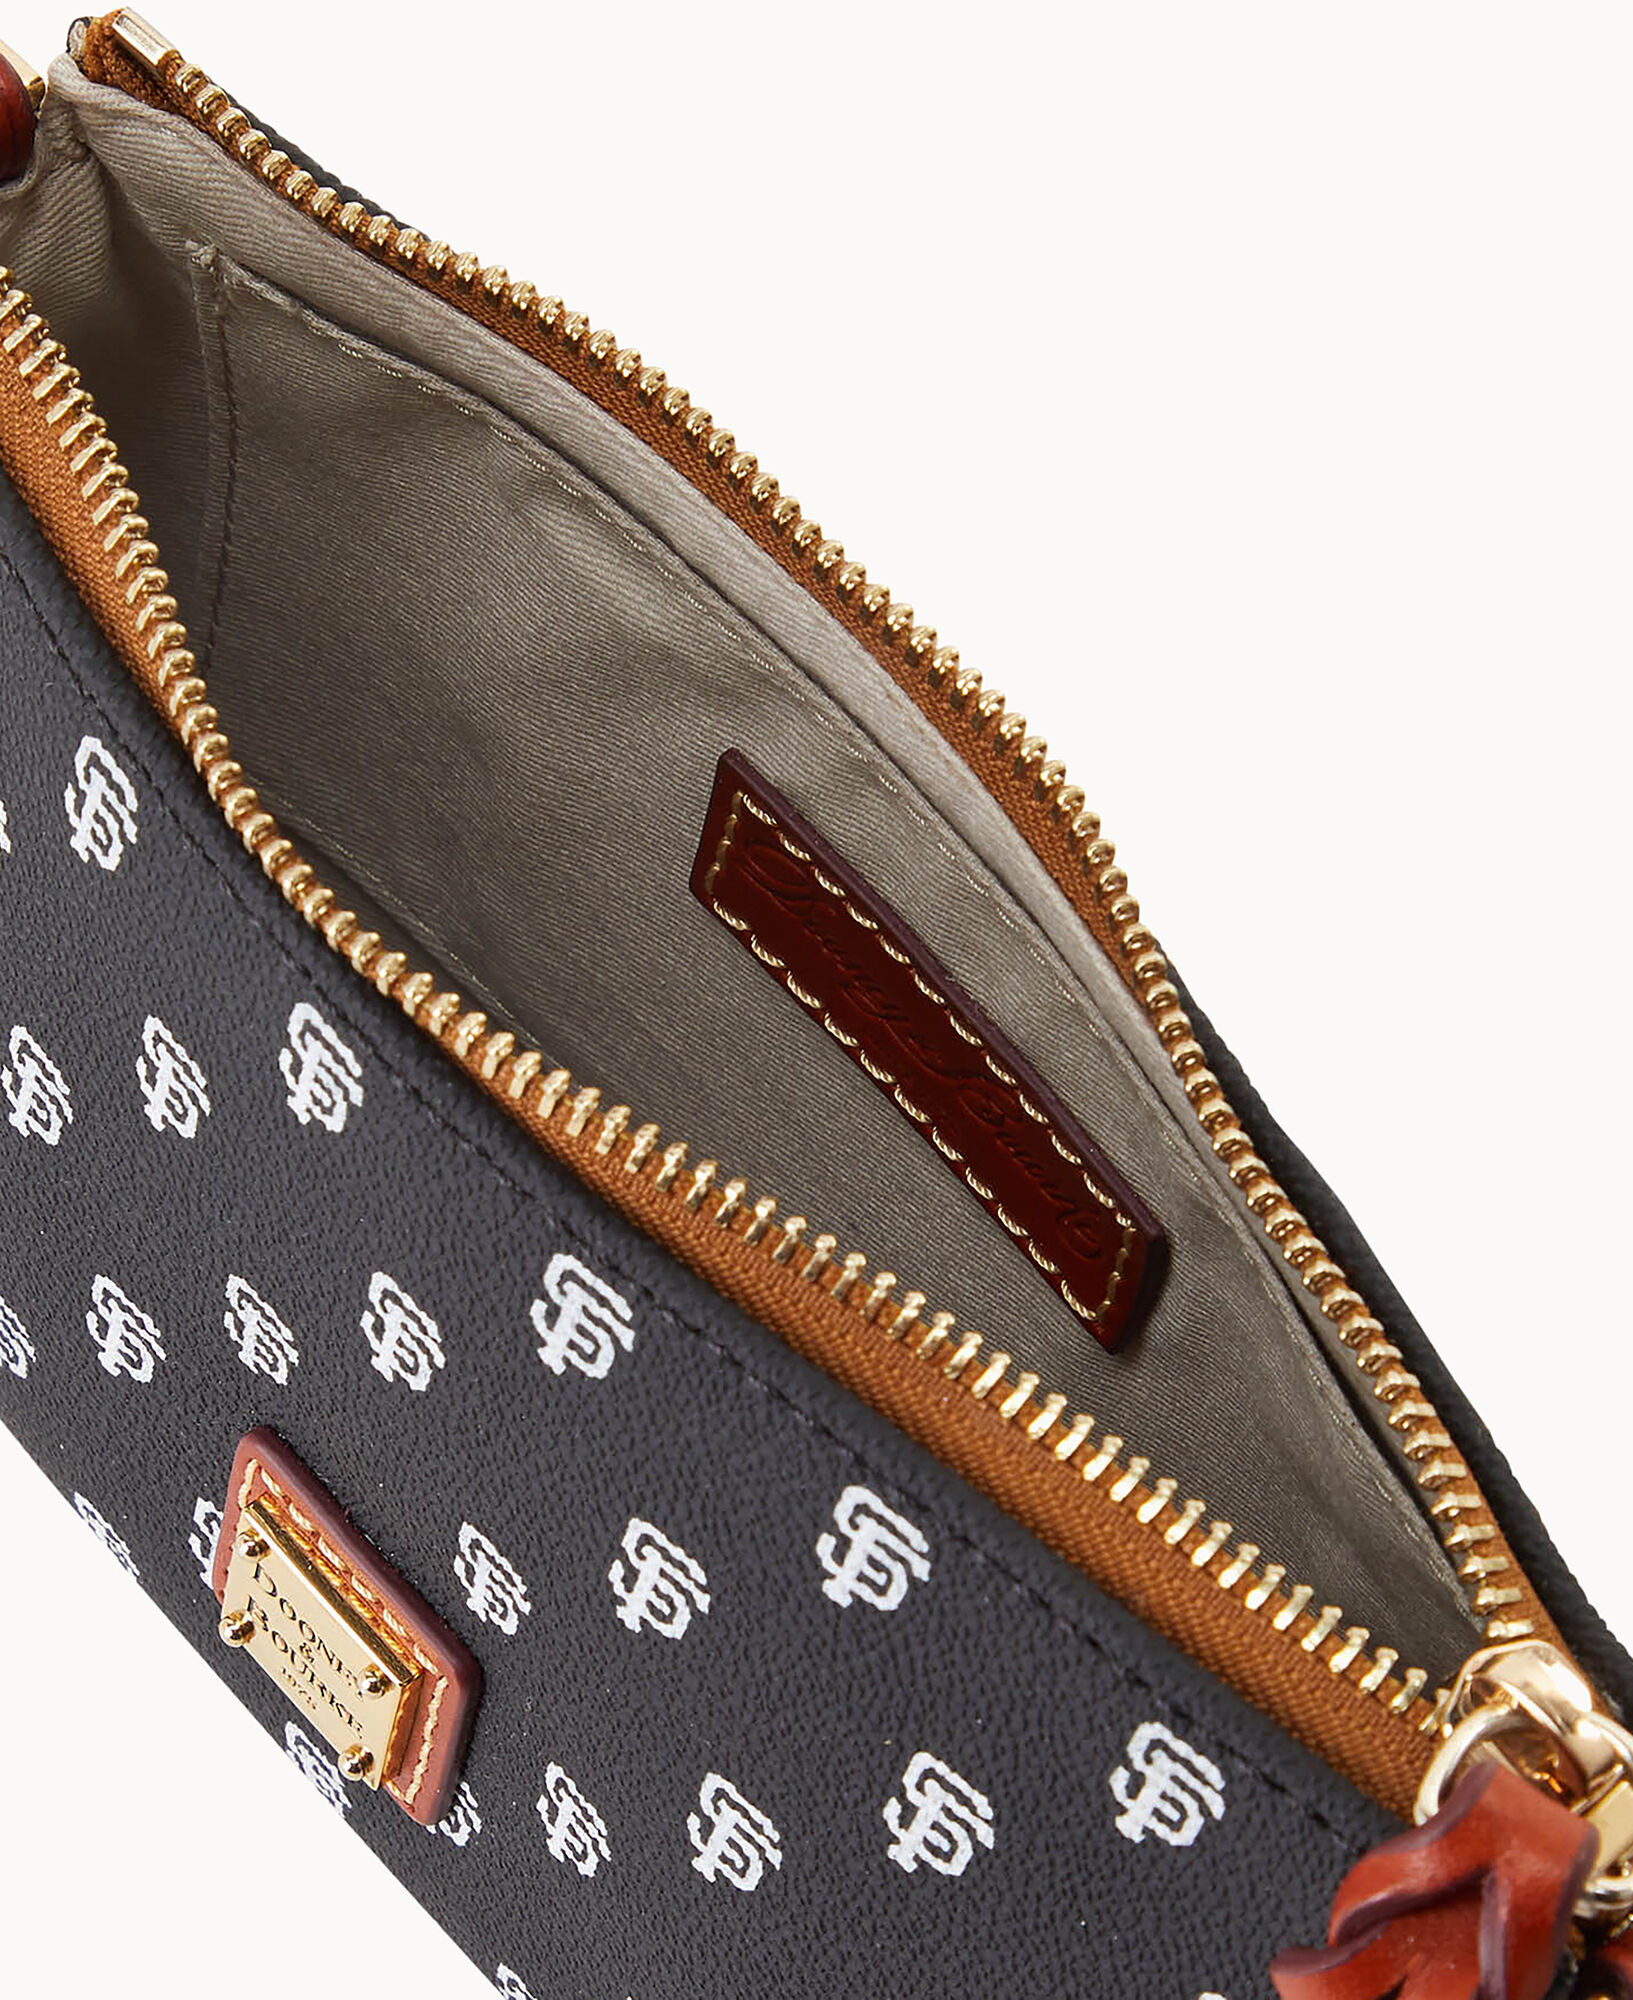 DOONEY & BOURKE LEXI Black Saffiano Leather Small Adjustable Crossbody Bag